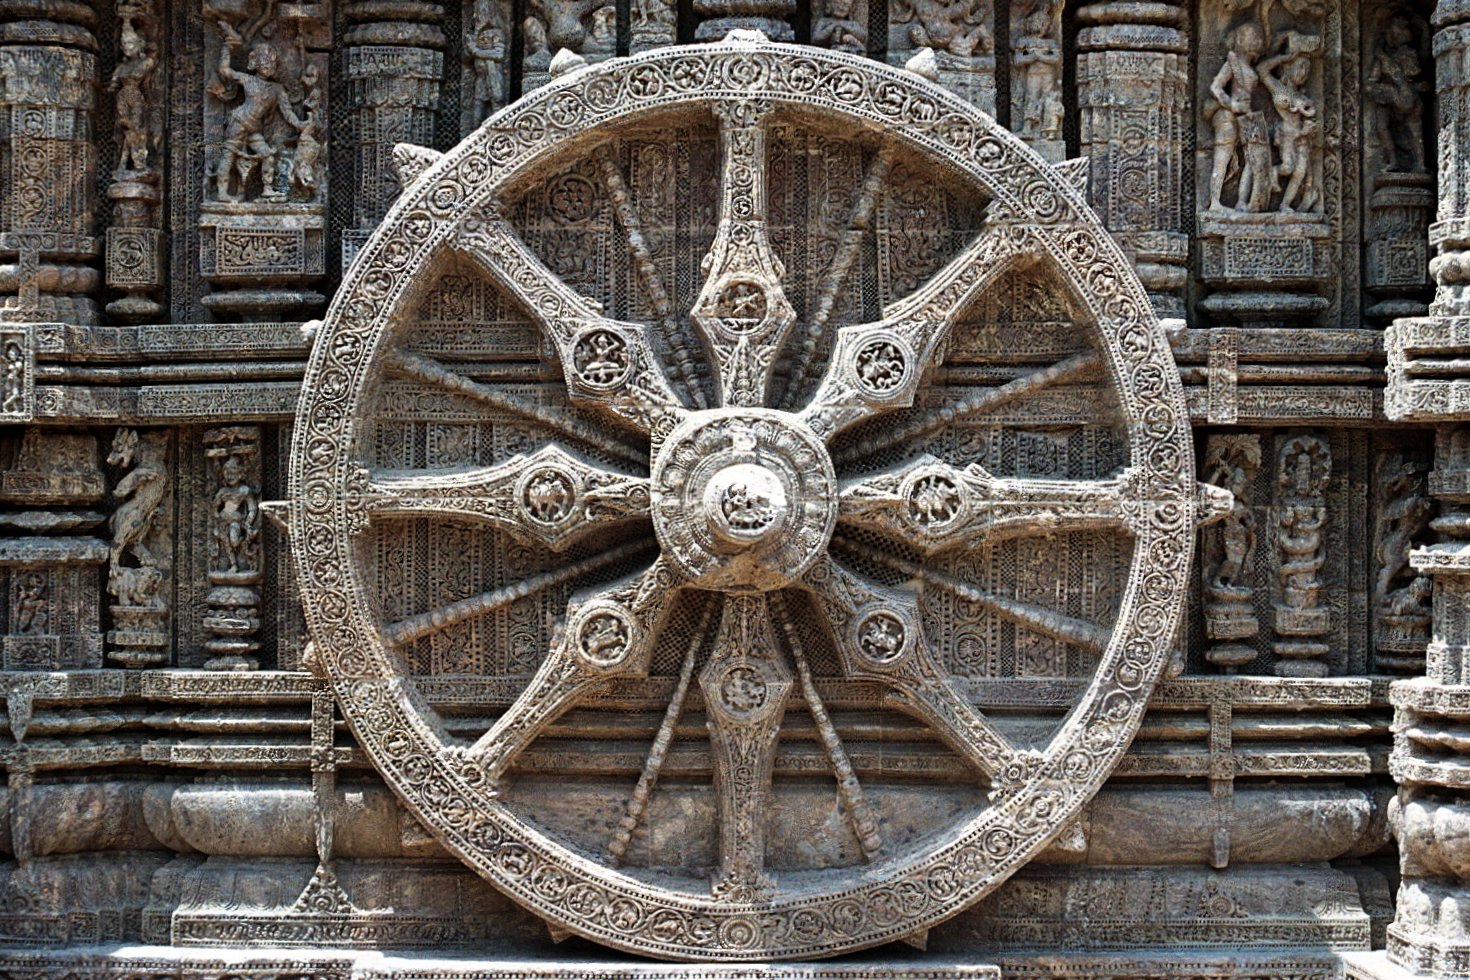 Shogun: Dhama wheel representing the eightfold way